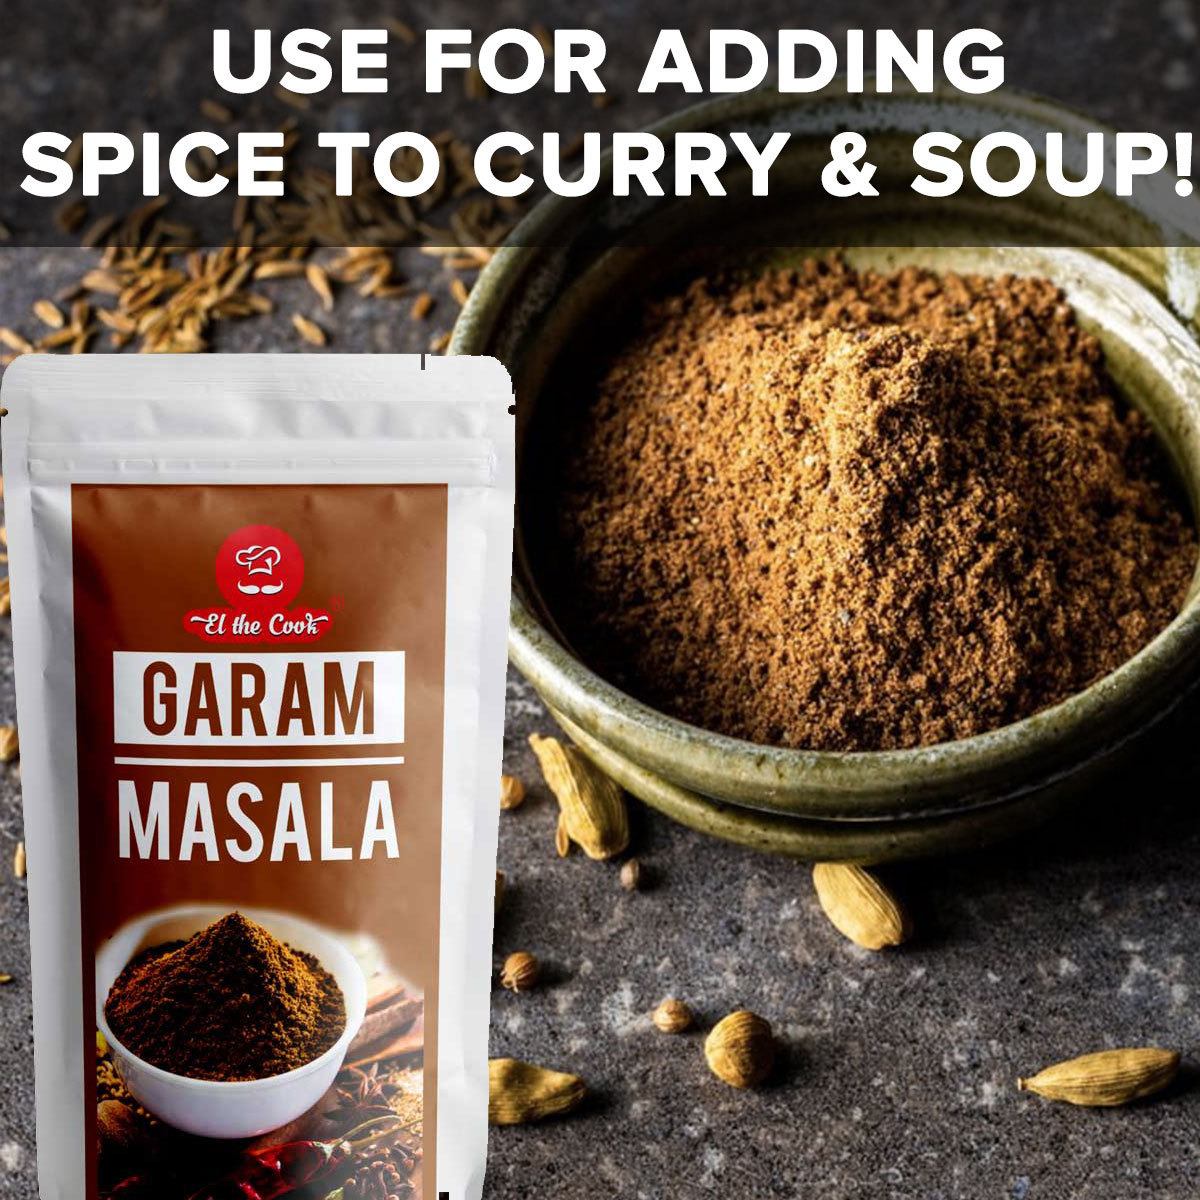 El The Cook Aromatic Garam Masala, Premium Indian Spice Blend, For Indian Dishes, 2.82oz, Vegan, Gluten-Free (Flavor: Garam Masala)